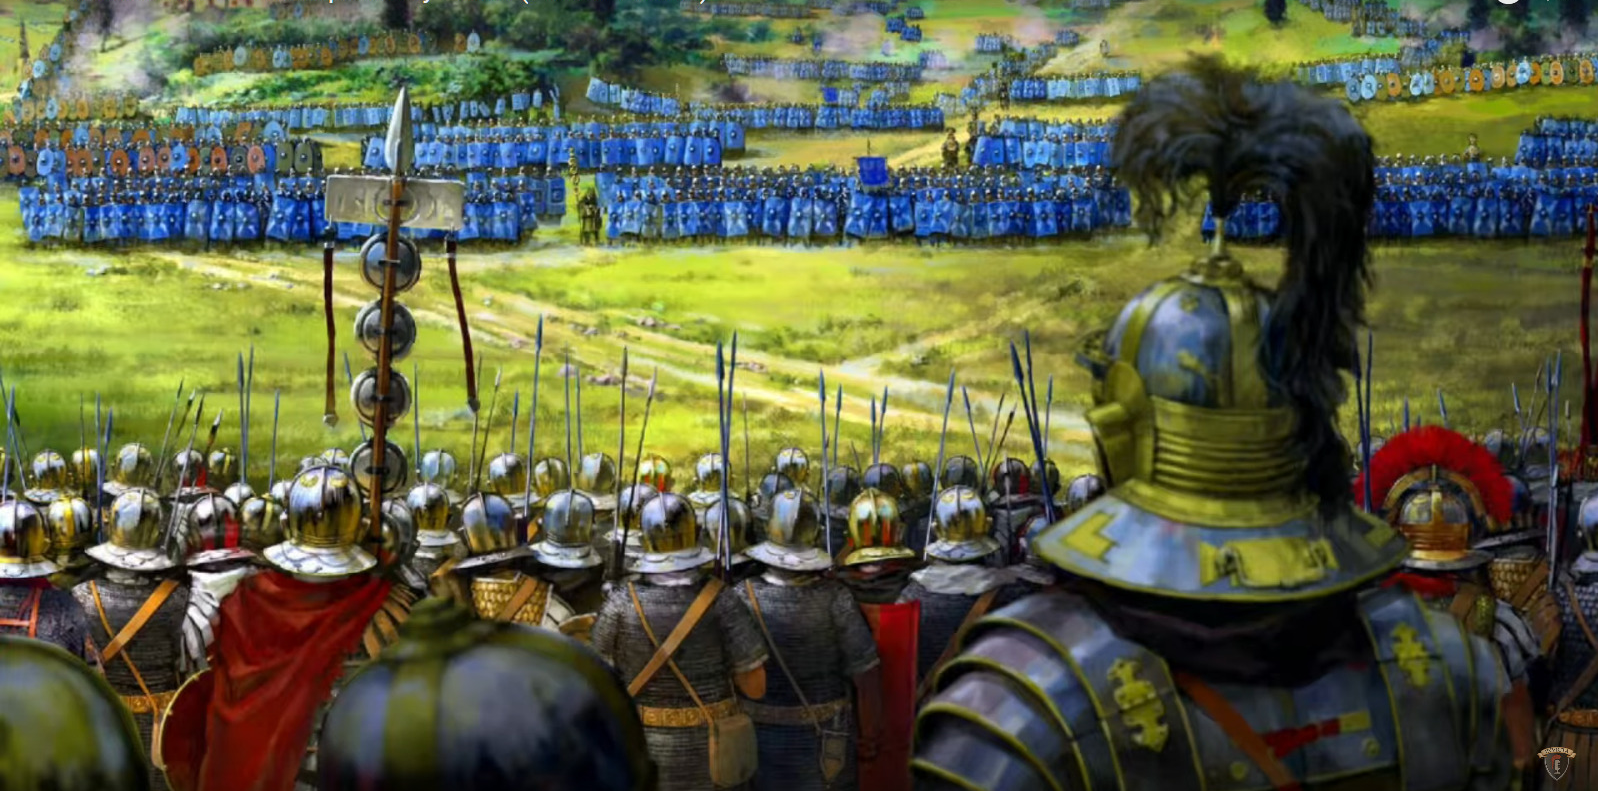 The Imperial Roman Principate Army